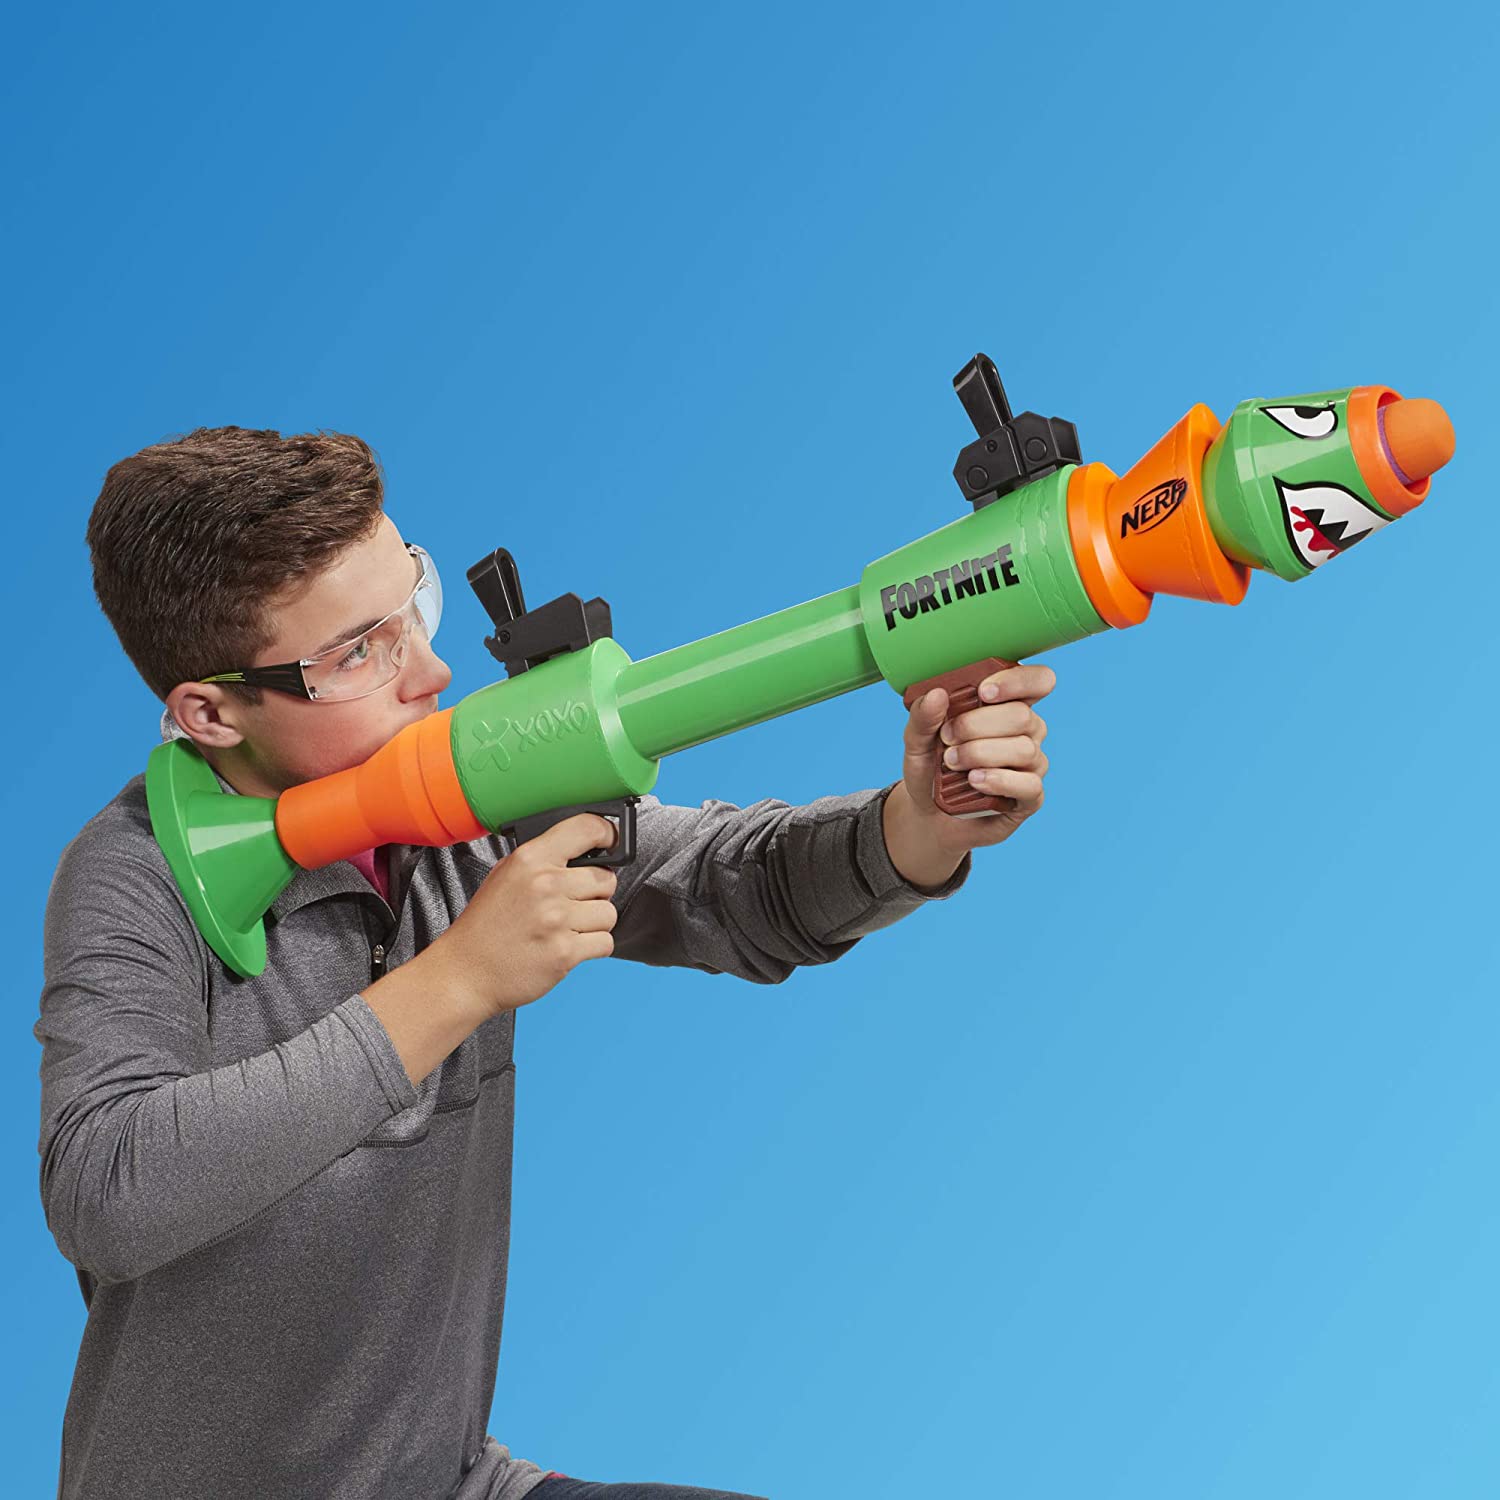 Nerf Fortnite Bazooka Lanza Cohetes Rl Hasbro 